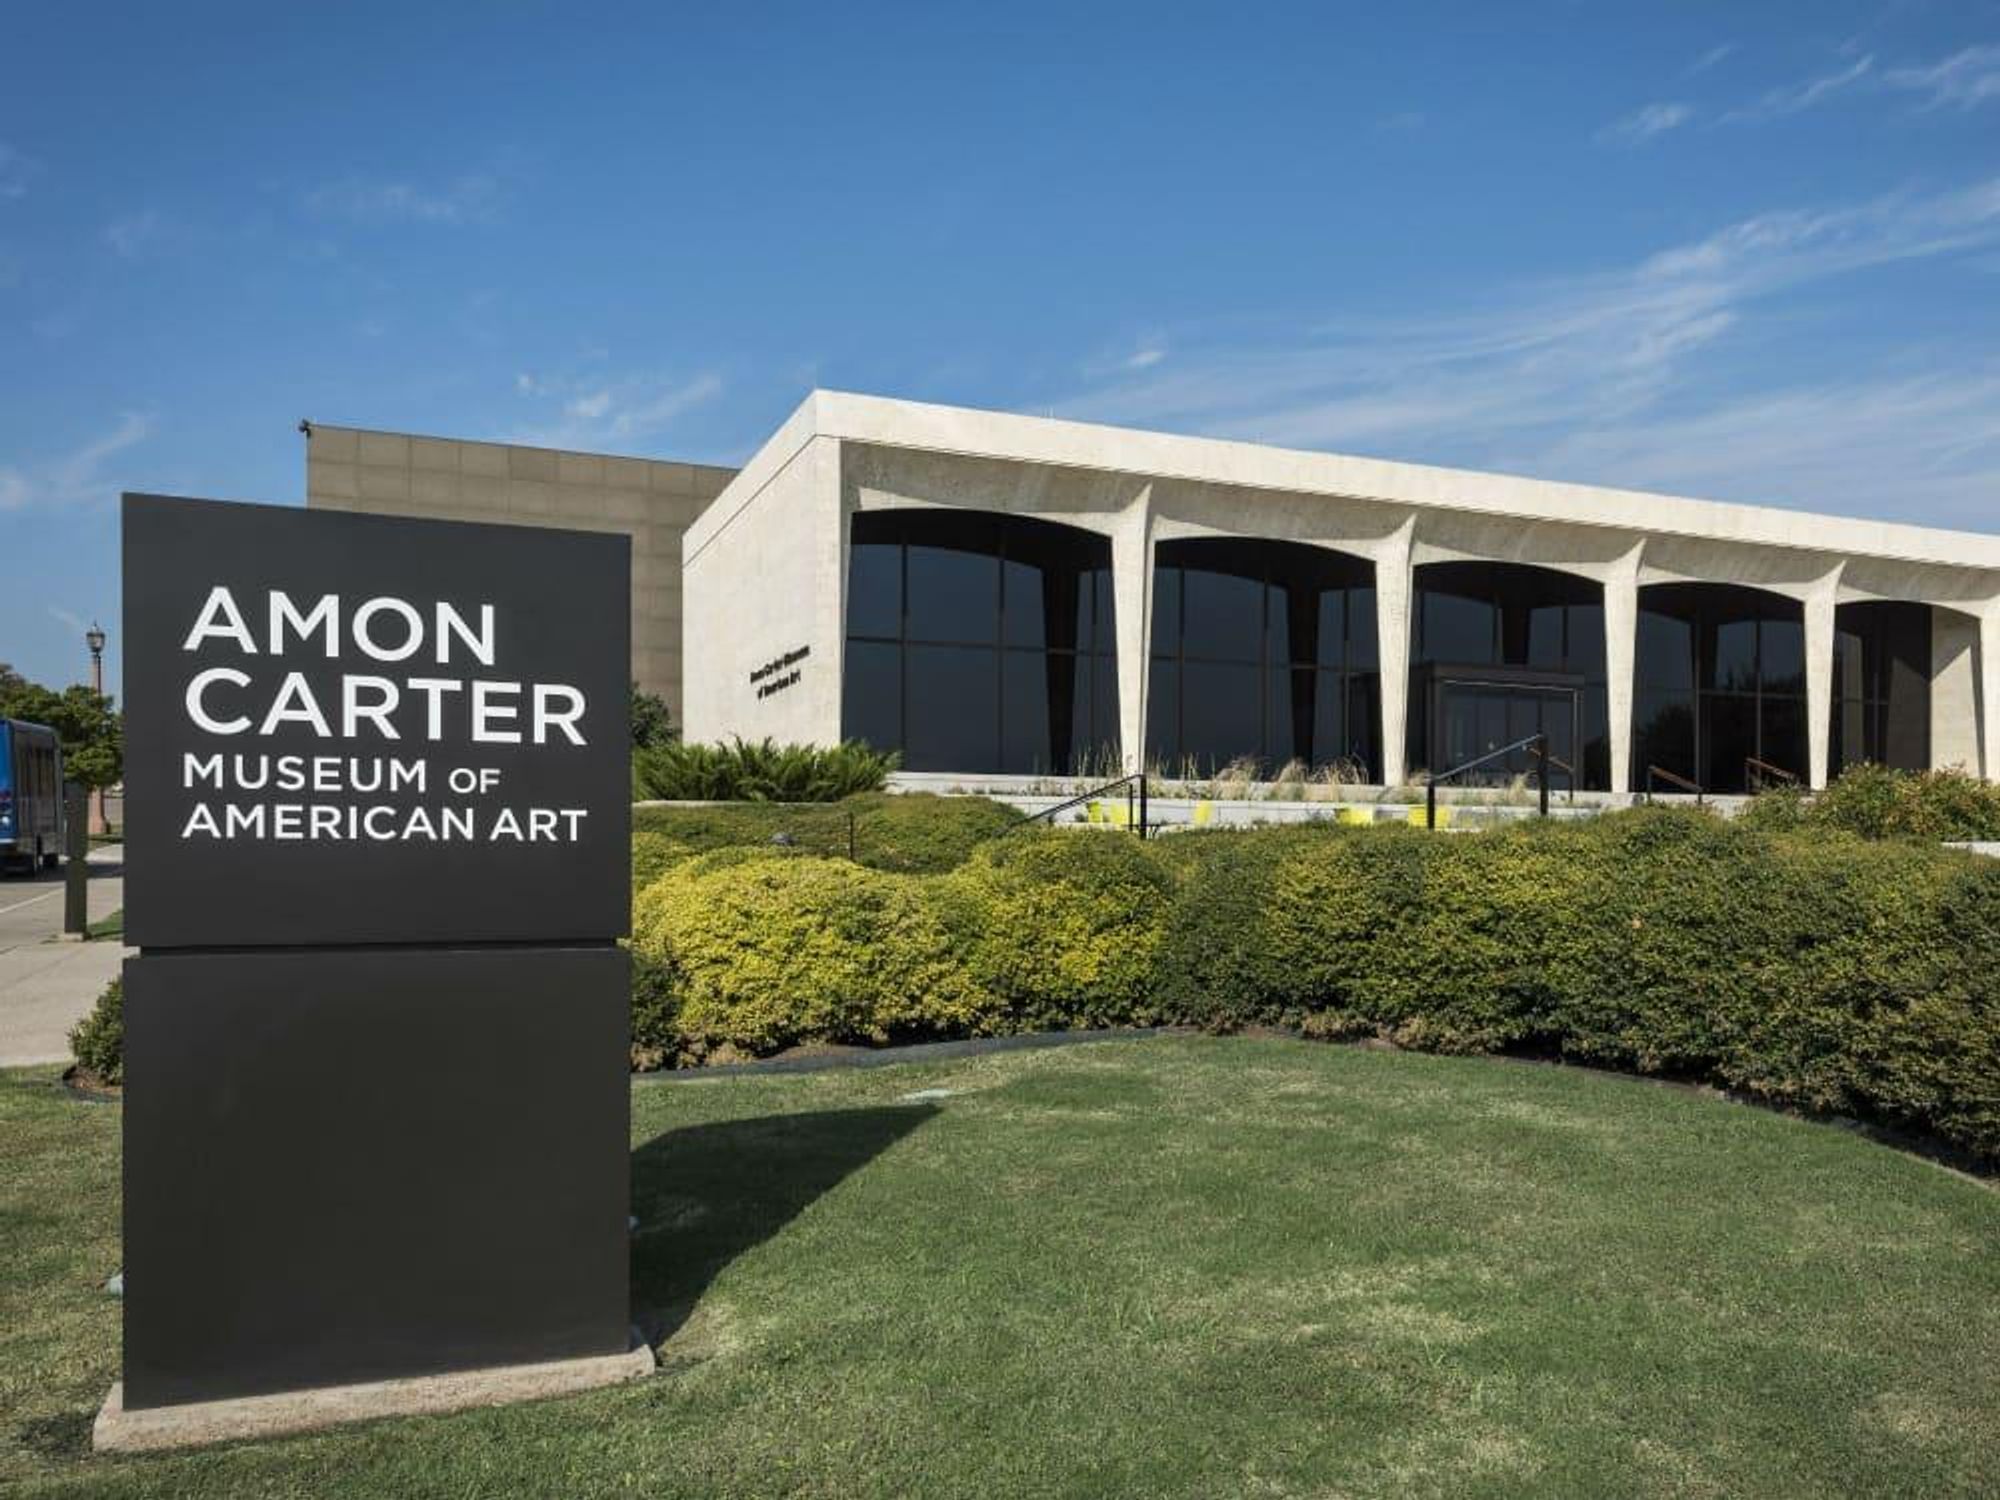 Amon Carter Museum of American Art